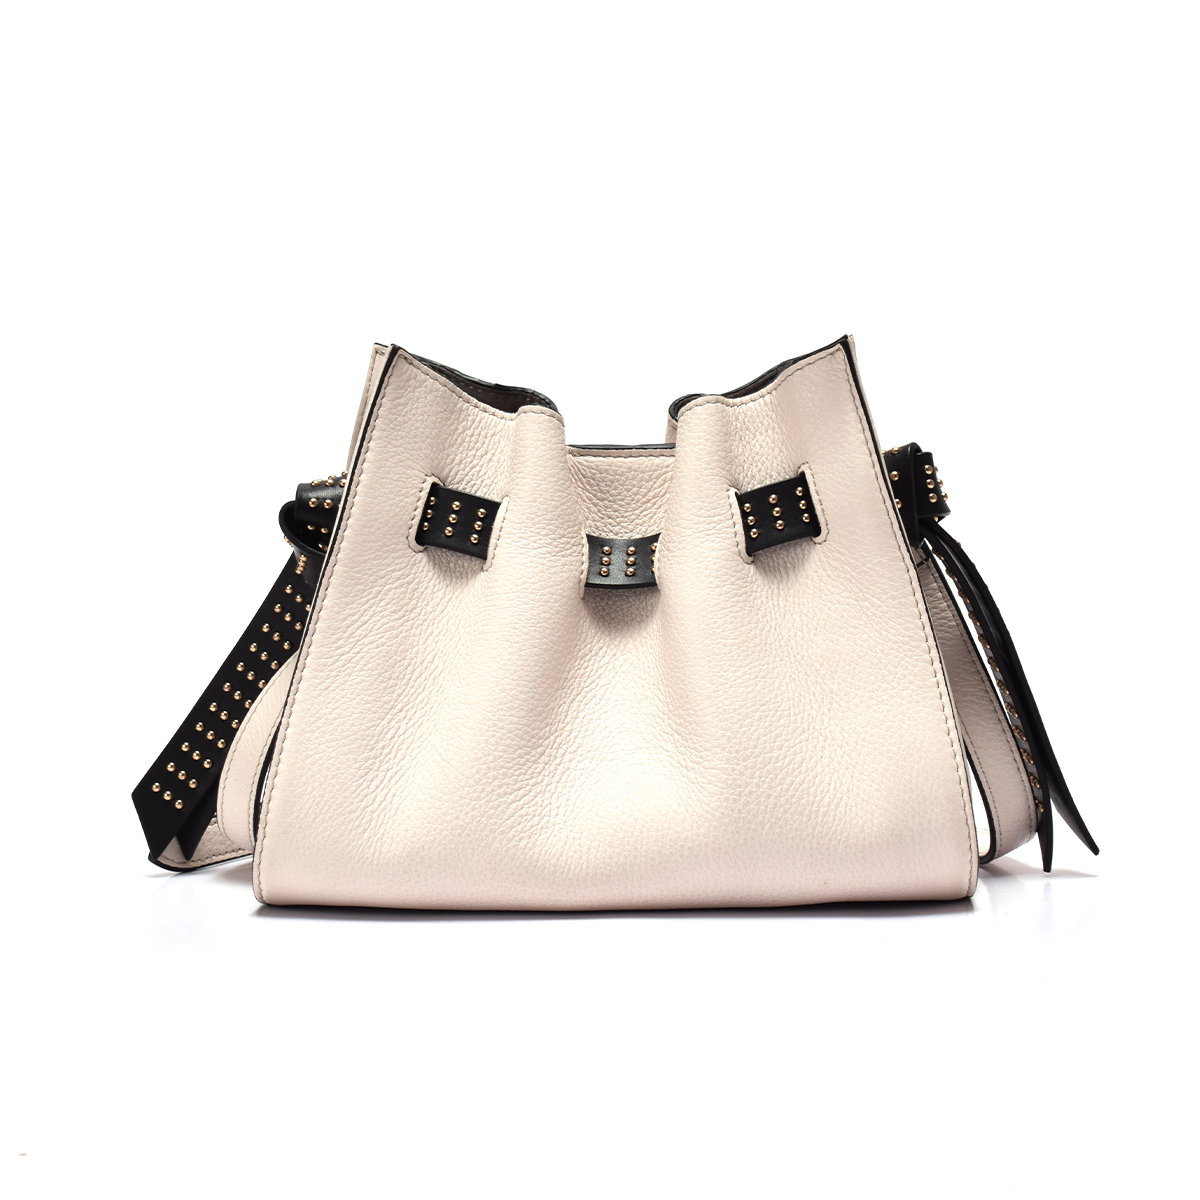 Sanlly classic brown leather shoulder handbags bulk production for girls-2